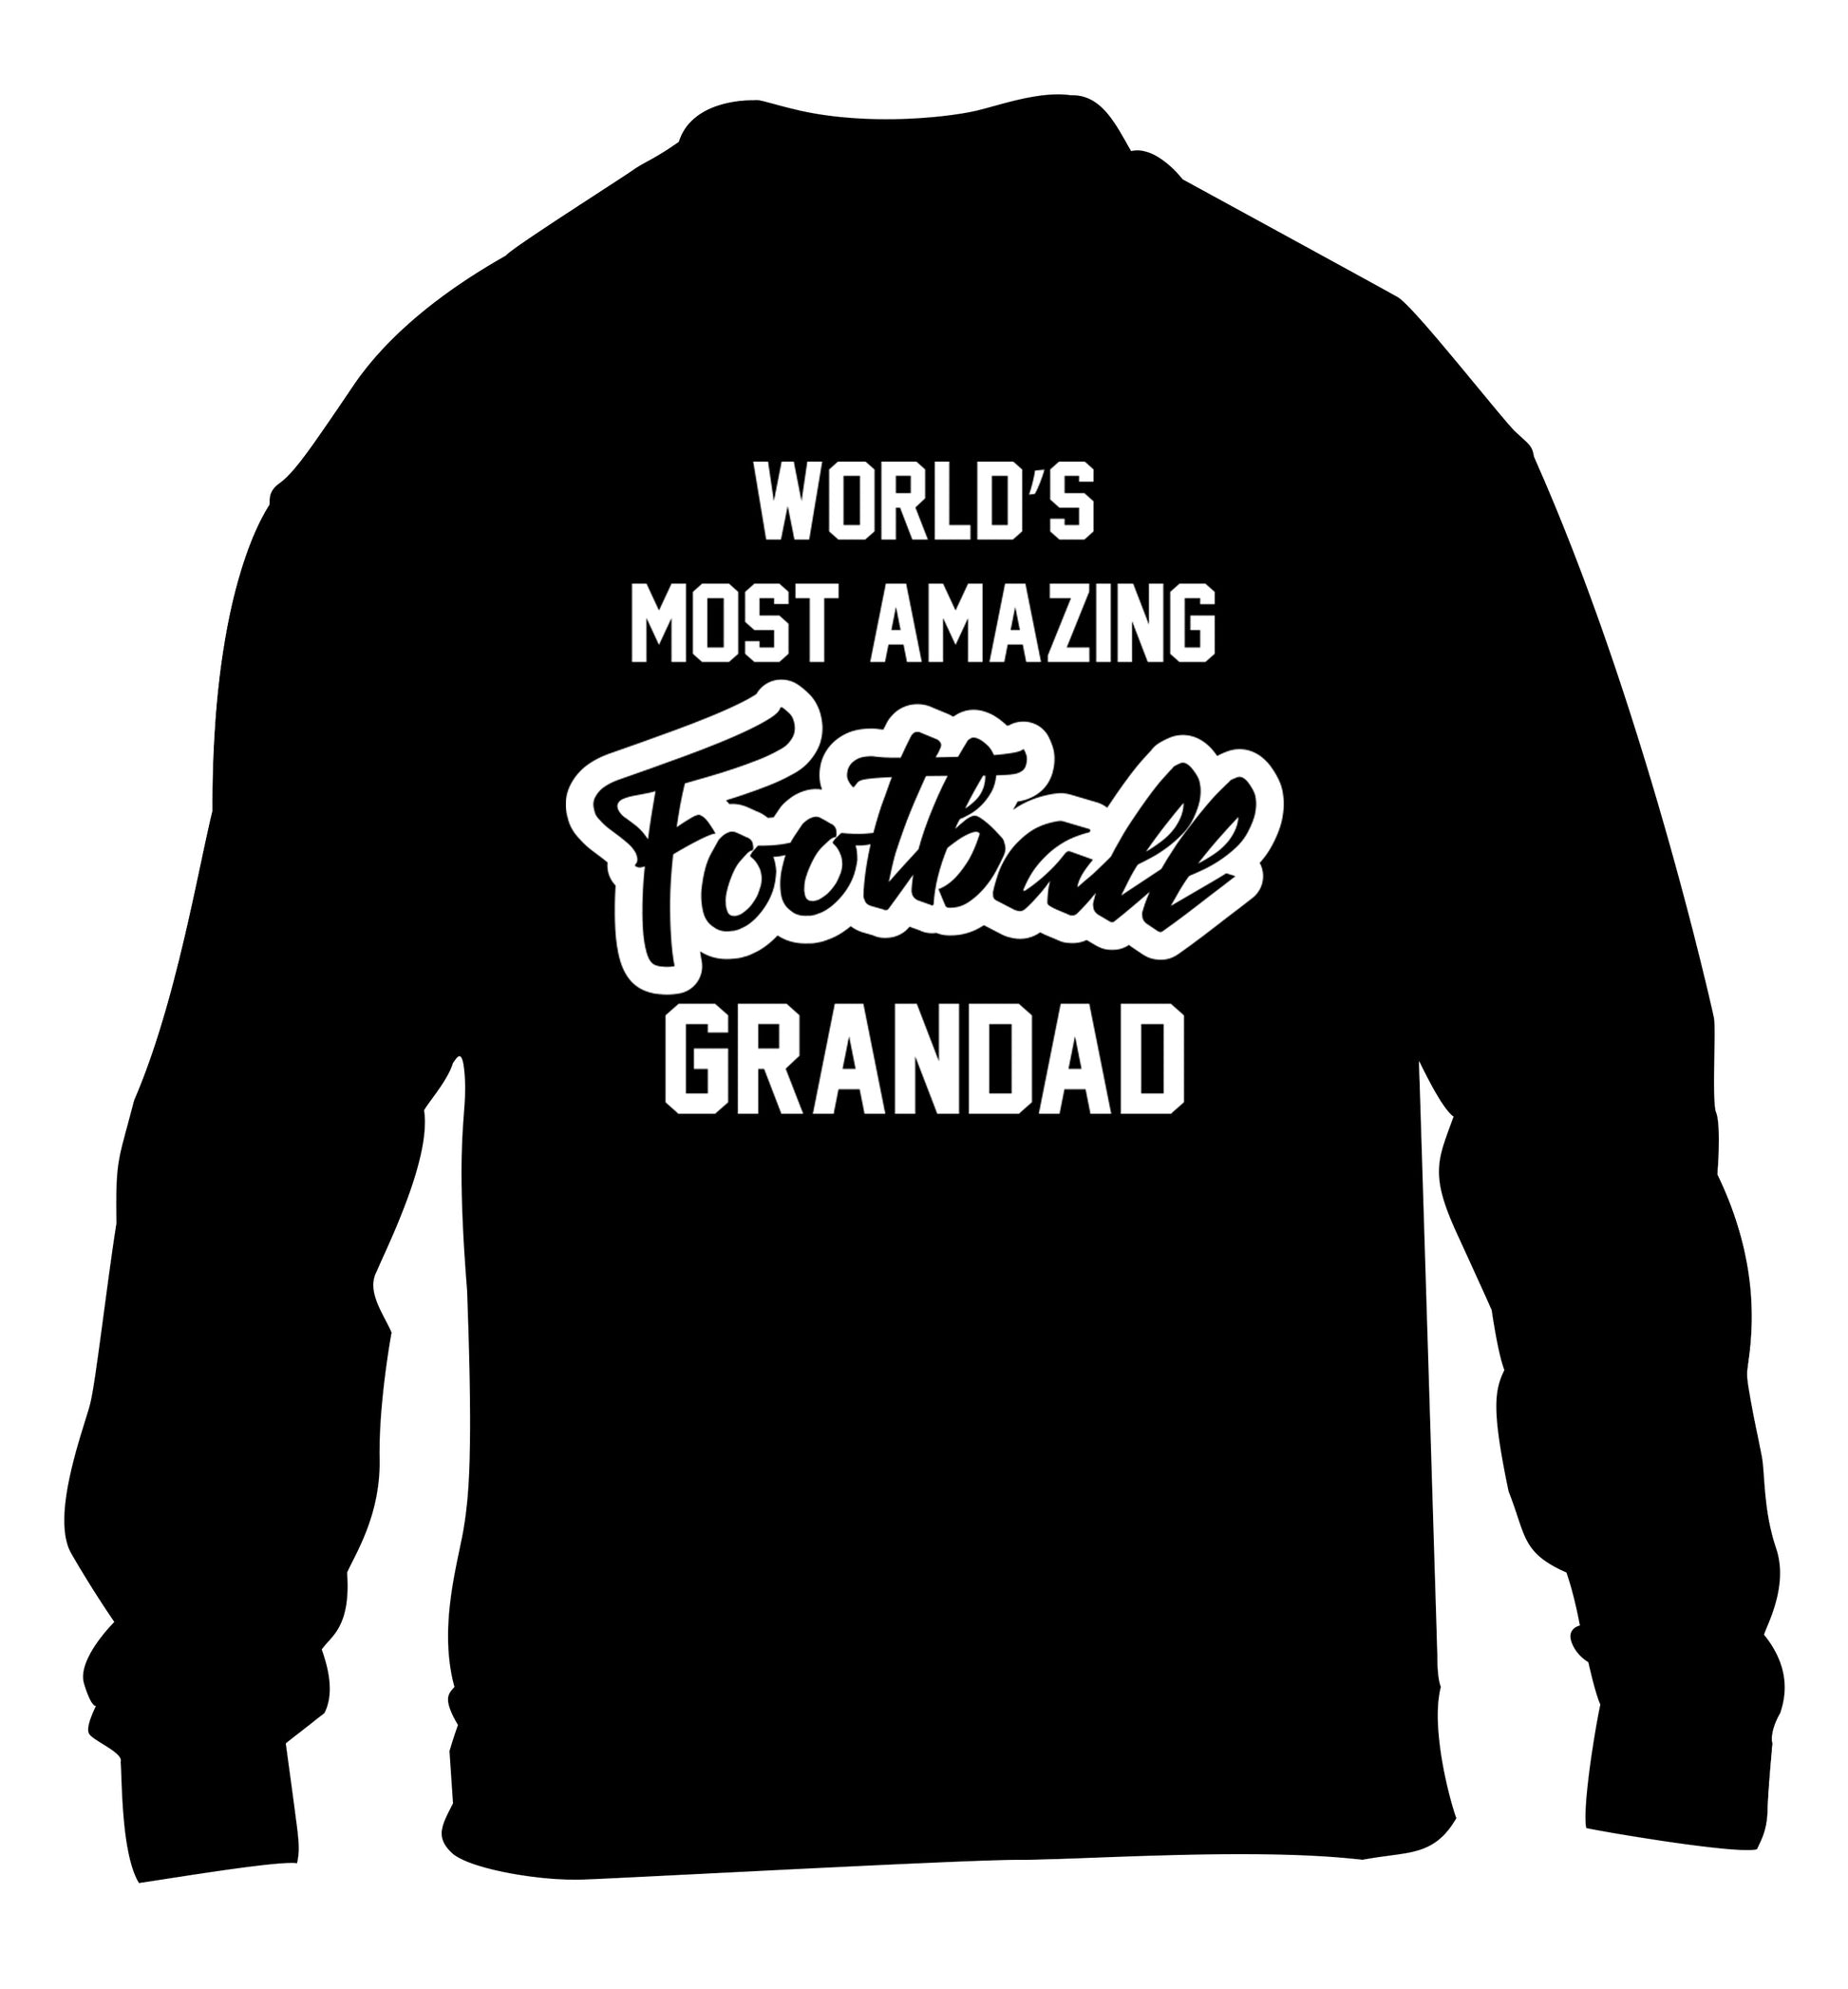 Worlds most amazing football grandad children's black sweater 12-14 Years